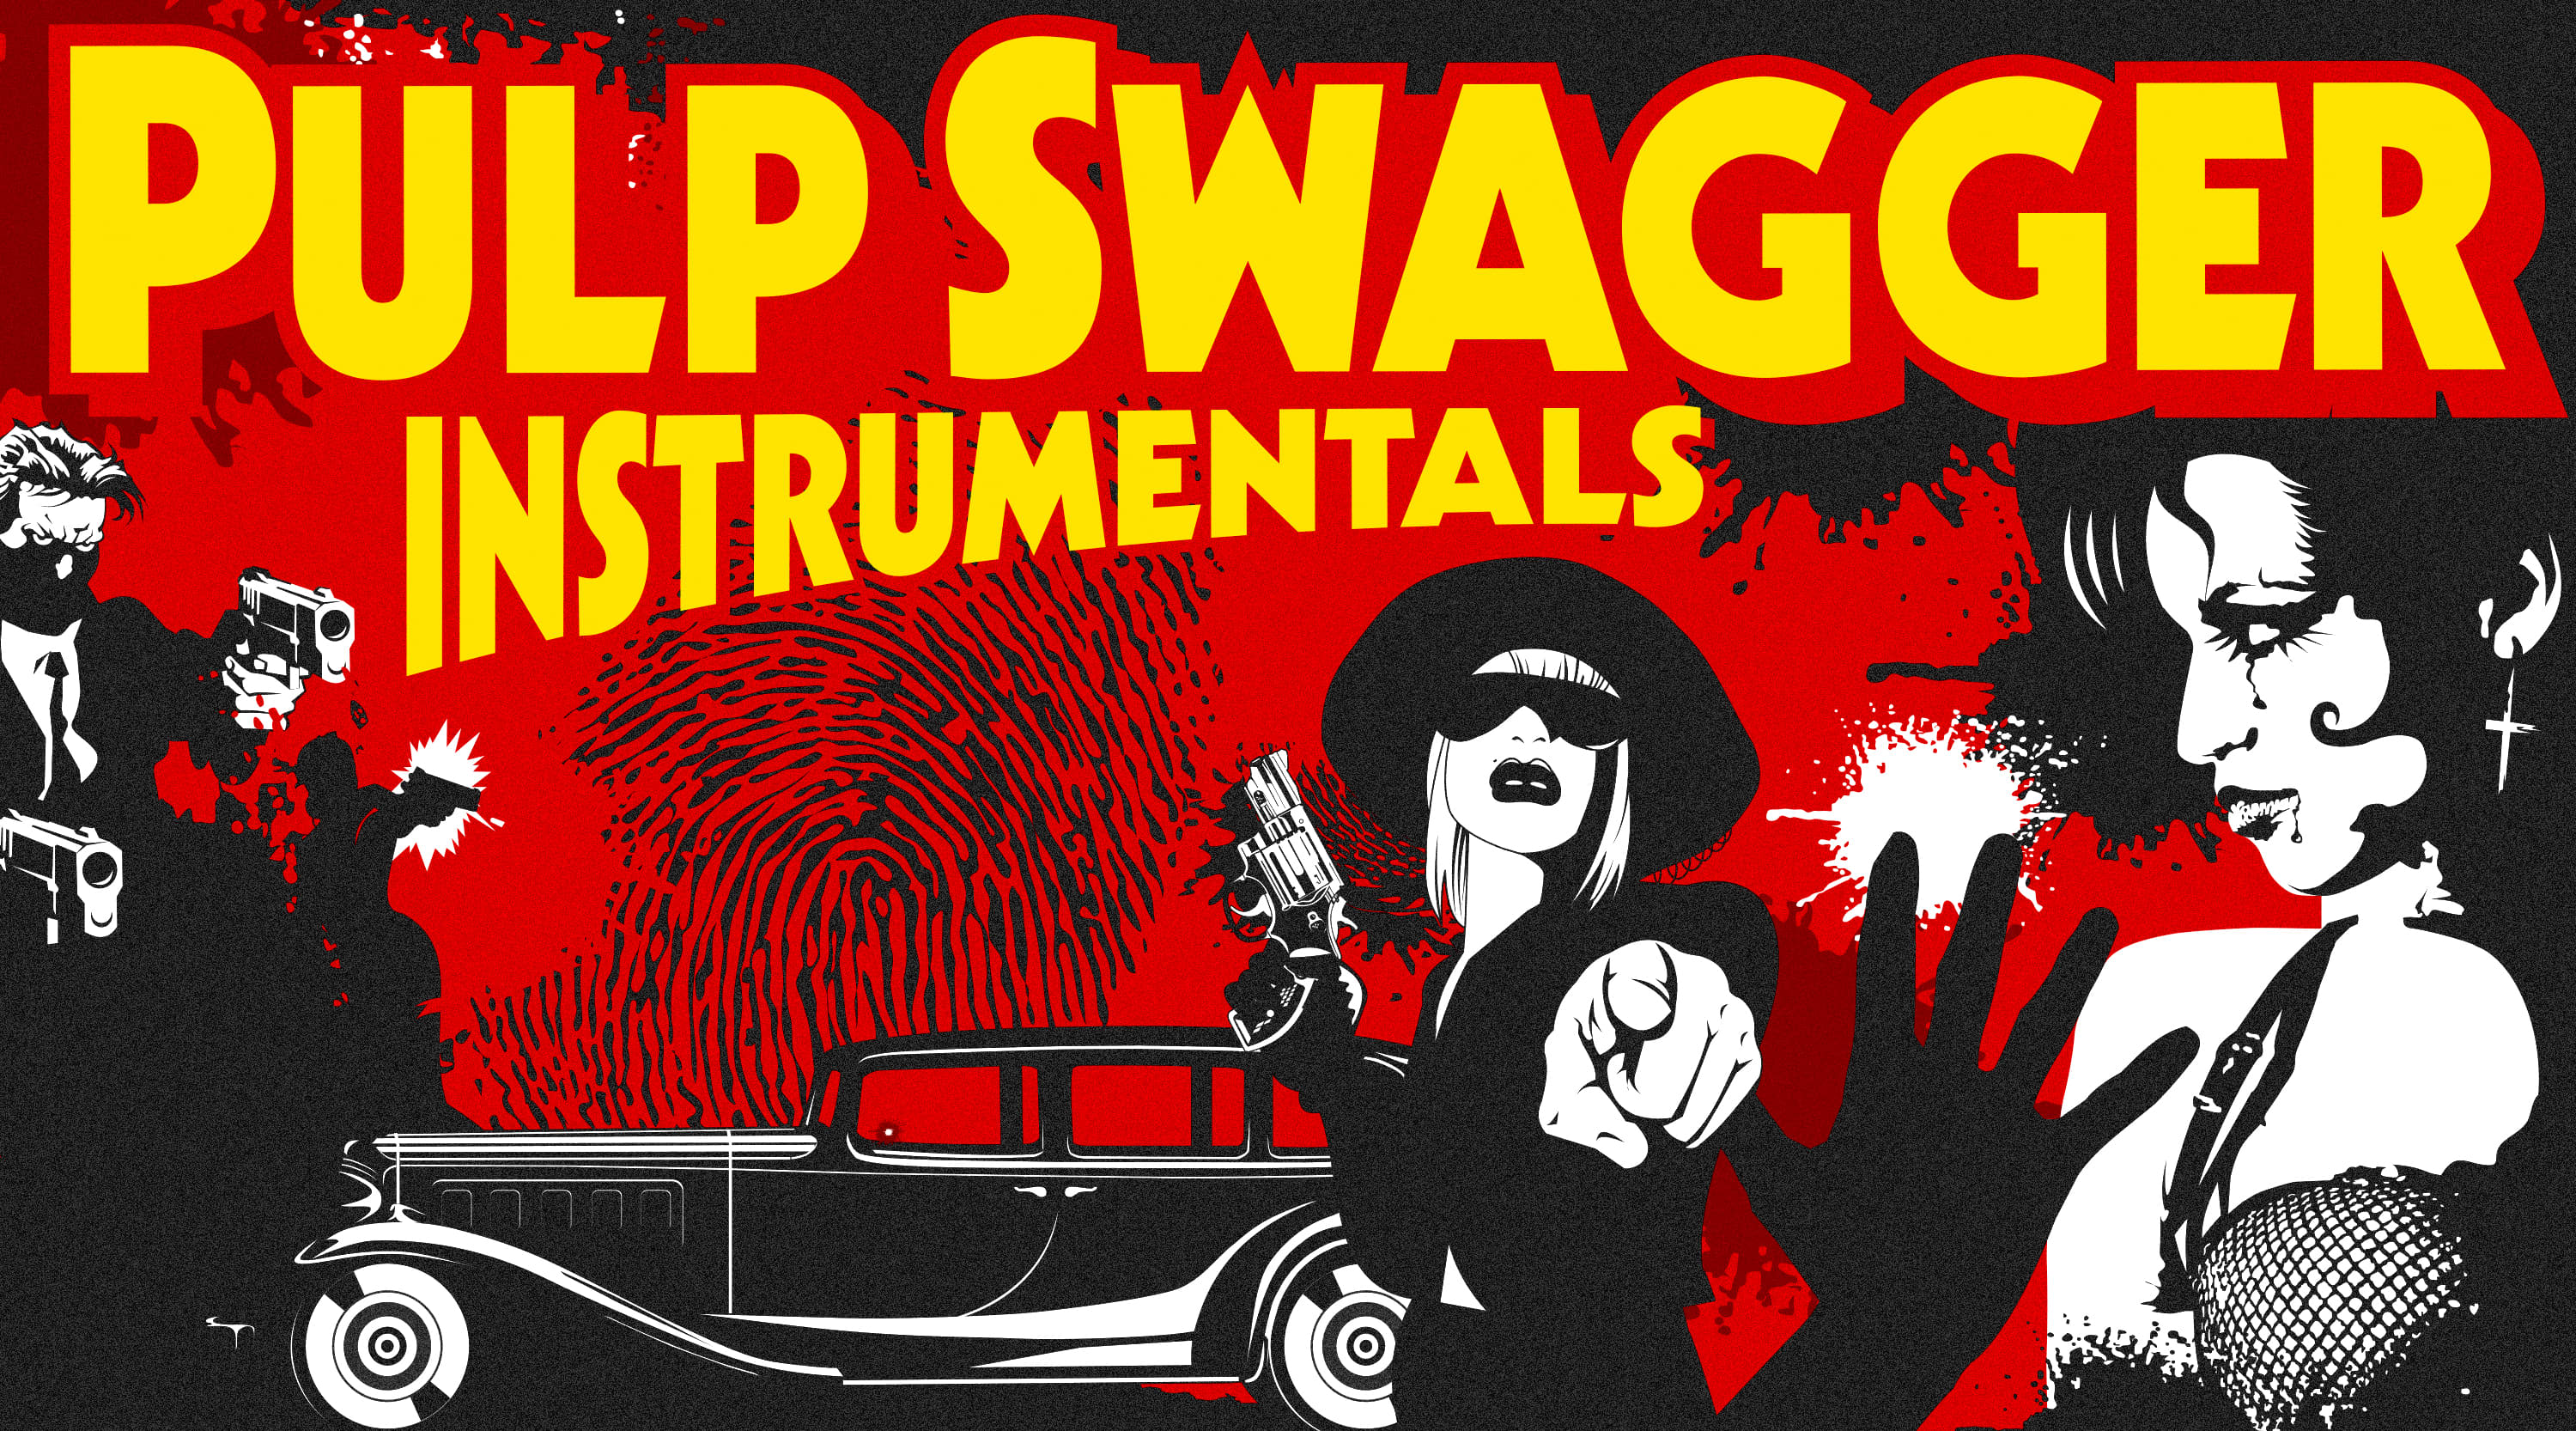 Pulp Swagger Instrumentals